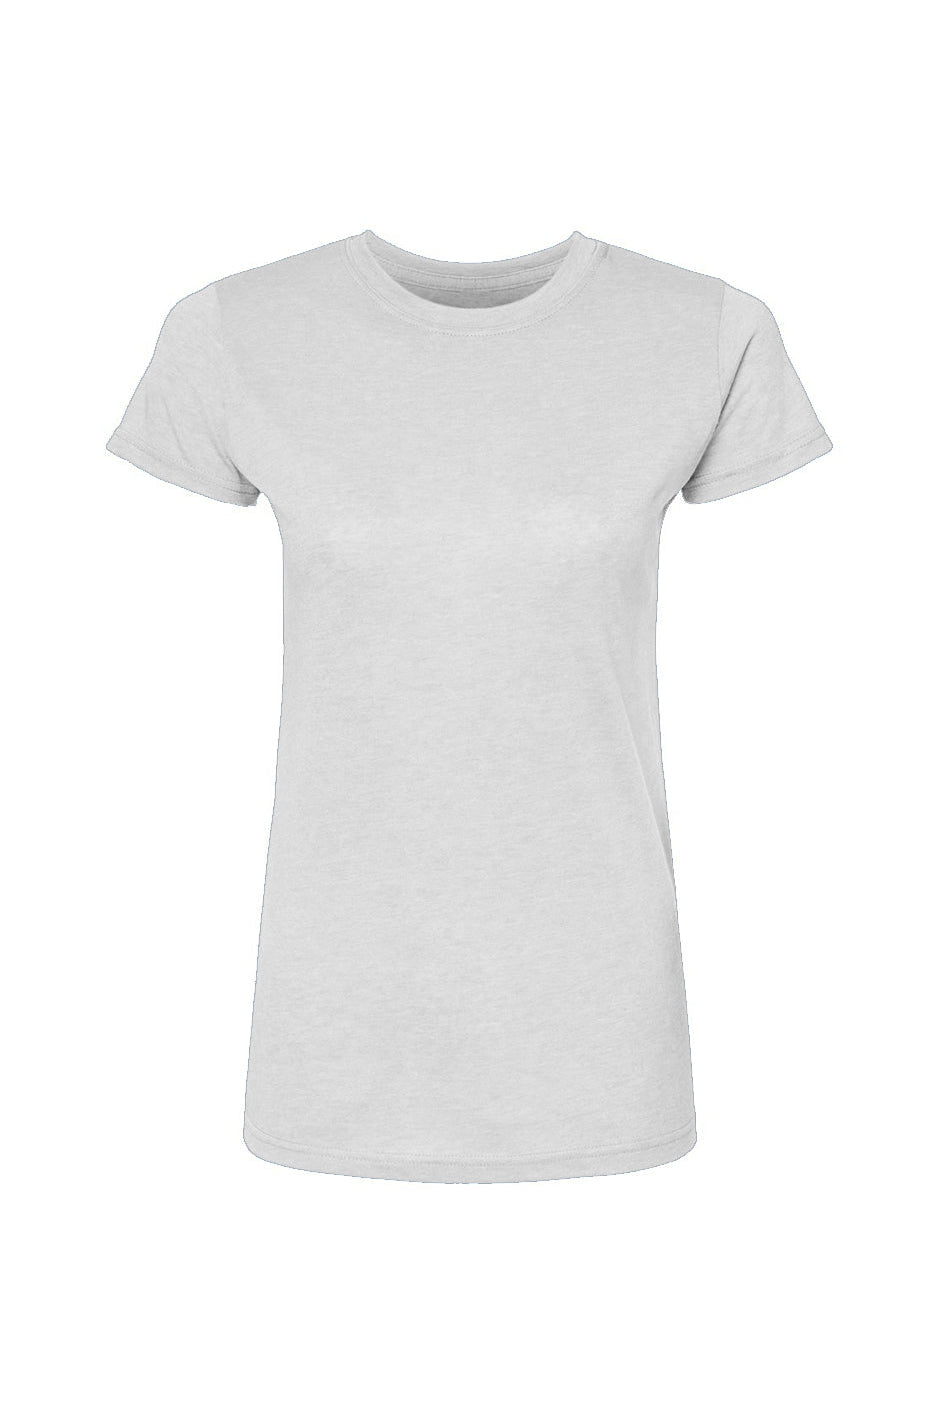 Women's White Poly-Rich T-Shirt - Women's T-shirt - Apliiq - Women's White Poly-Rich T-Shirt - APQ-4648775S5A0 - xs - white - Dragon Foxx™ - Feminine Fit T-Shirt - Global Shipping